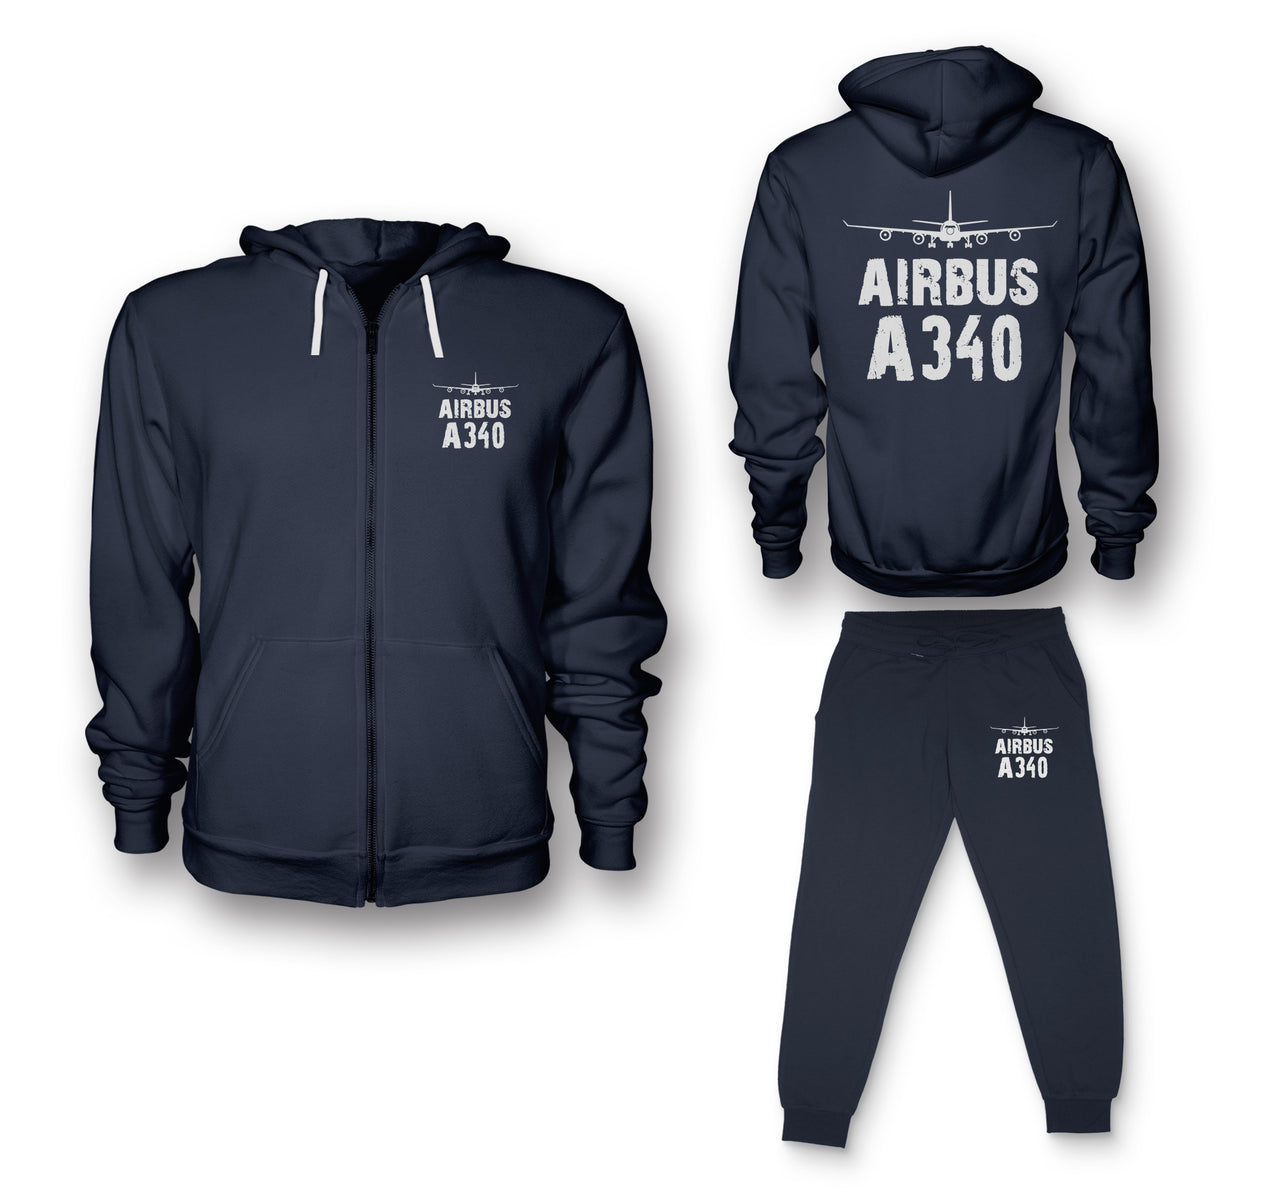 Airbus A340 & Plane Designed Zipped Hoodies & Sweatpants Set